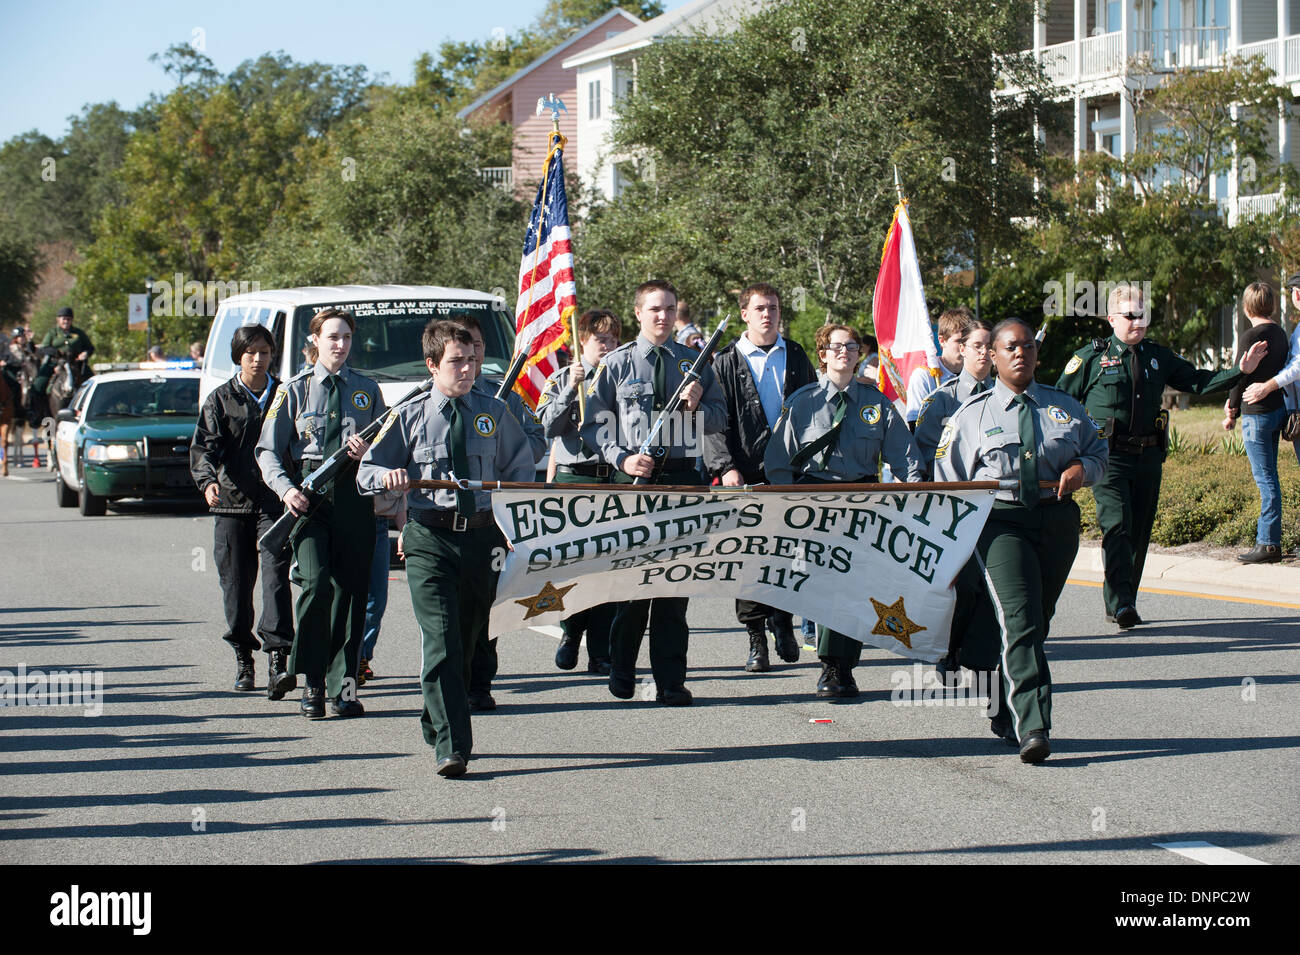 Escambia County Sheriffs Office Explorers march on Veterans Day parade Pensacola Florida USA Stock Photo